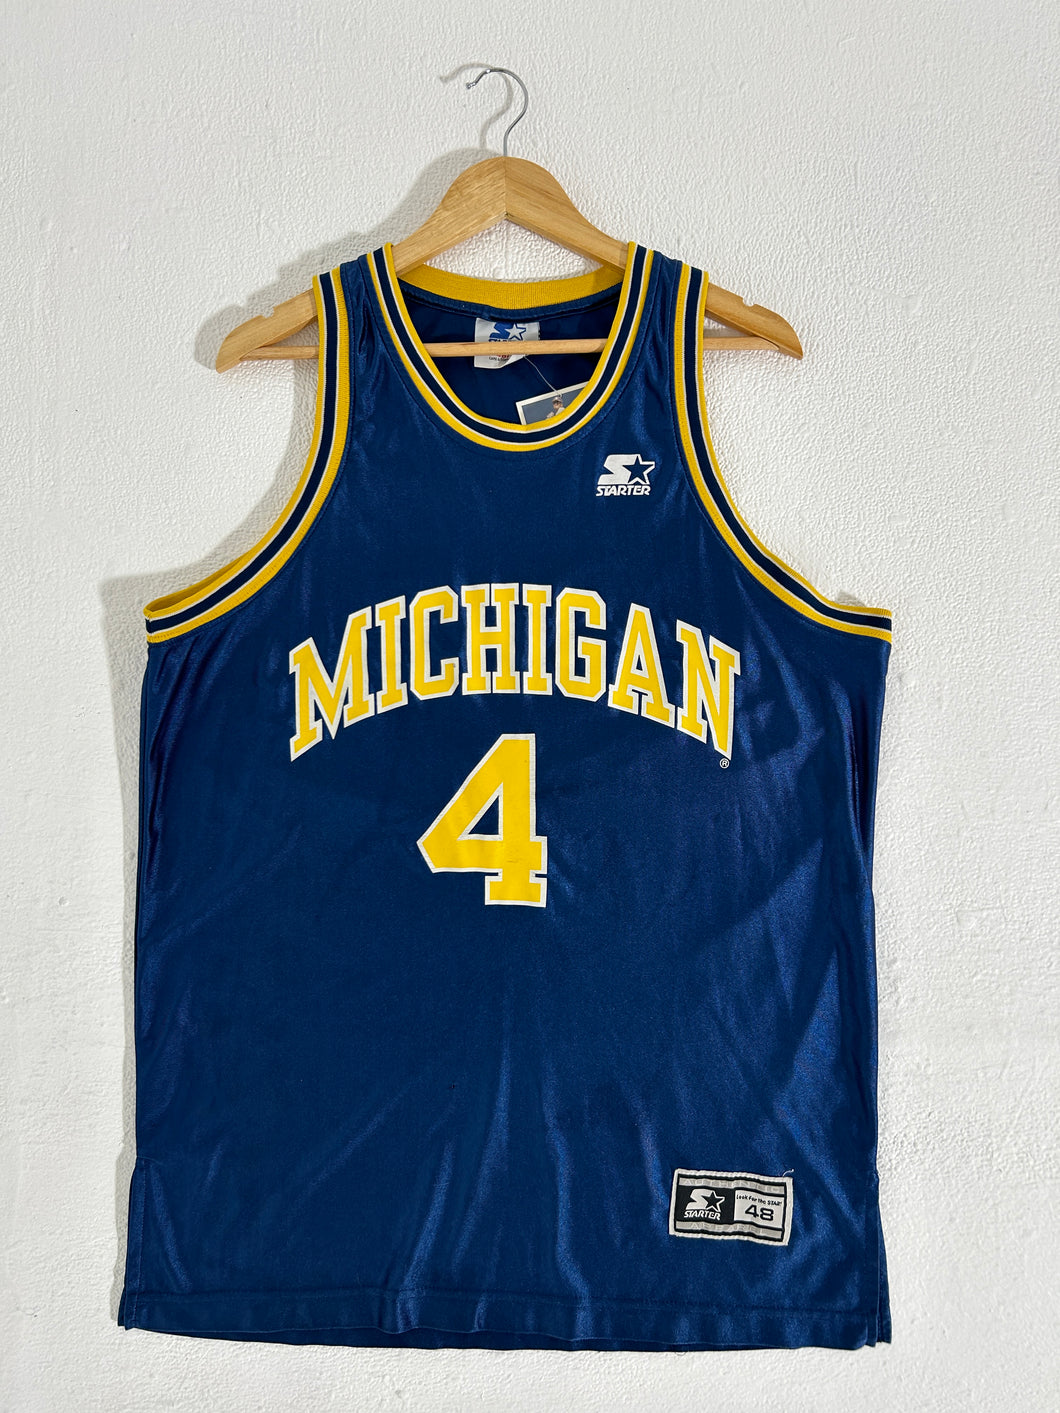 RS Vintage Chris Webber University of Michigan Basketball Starter Jersey Sz. L